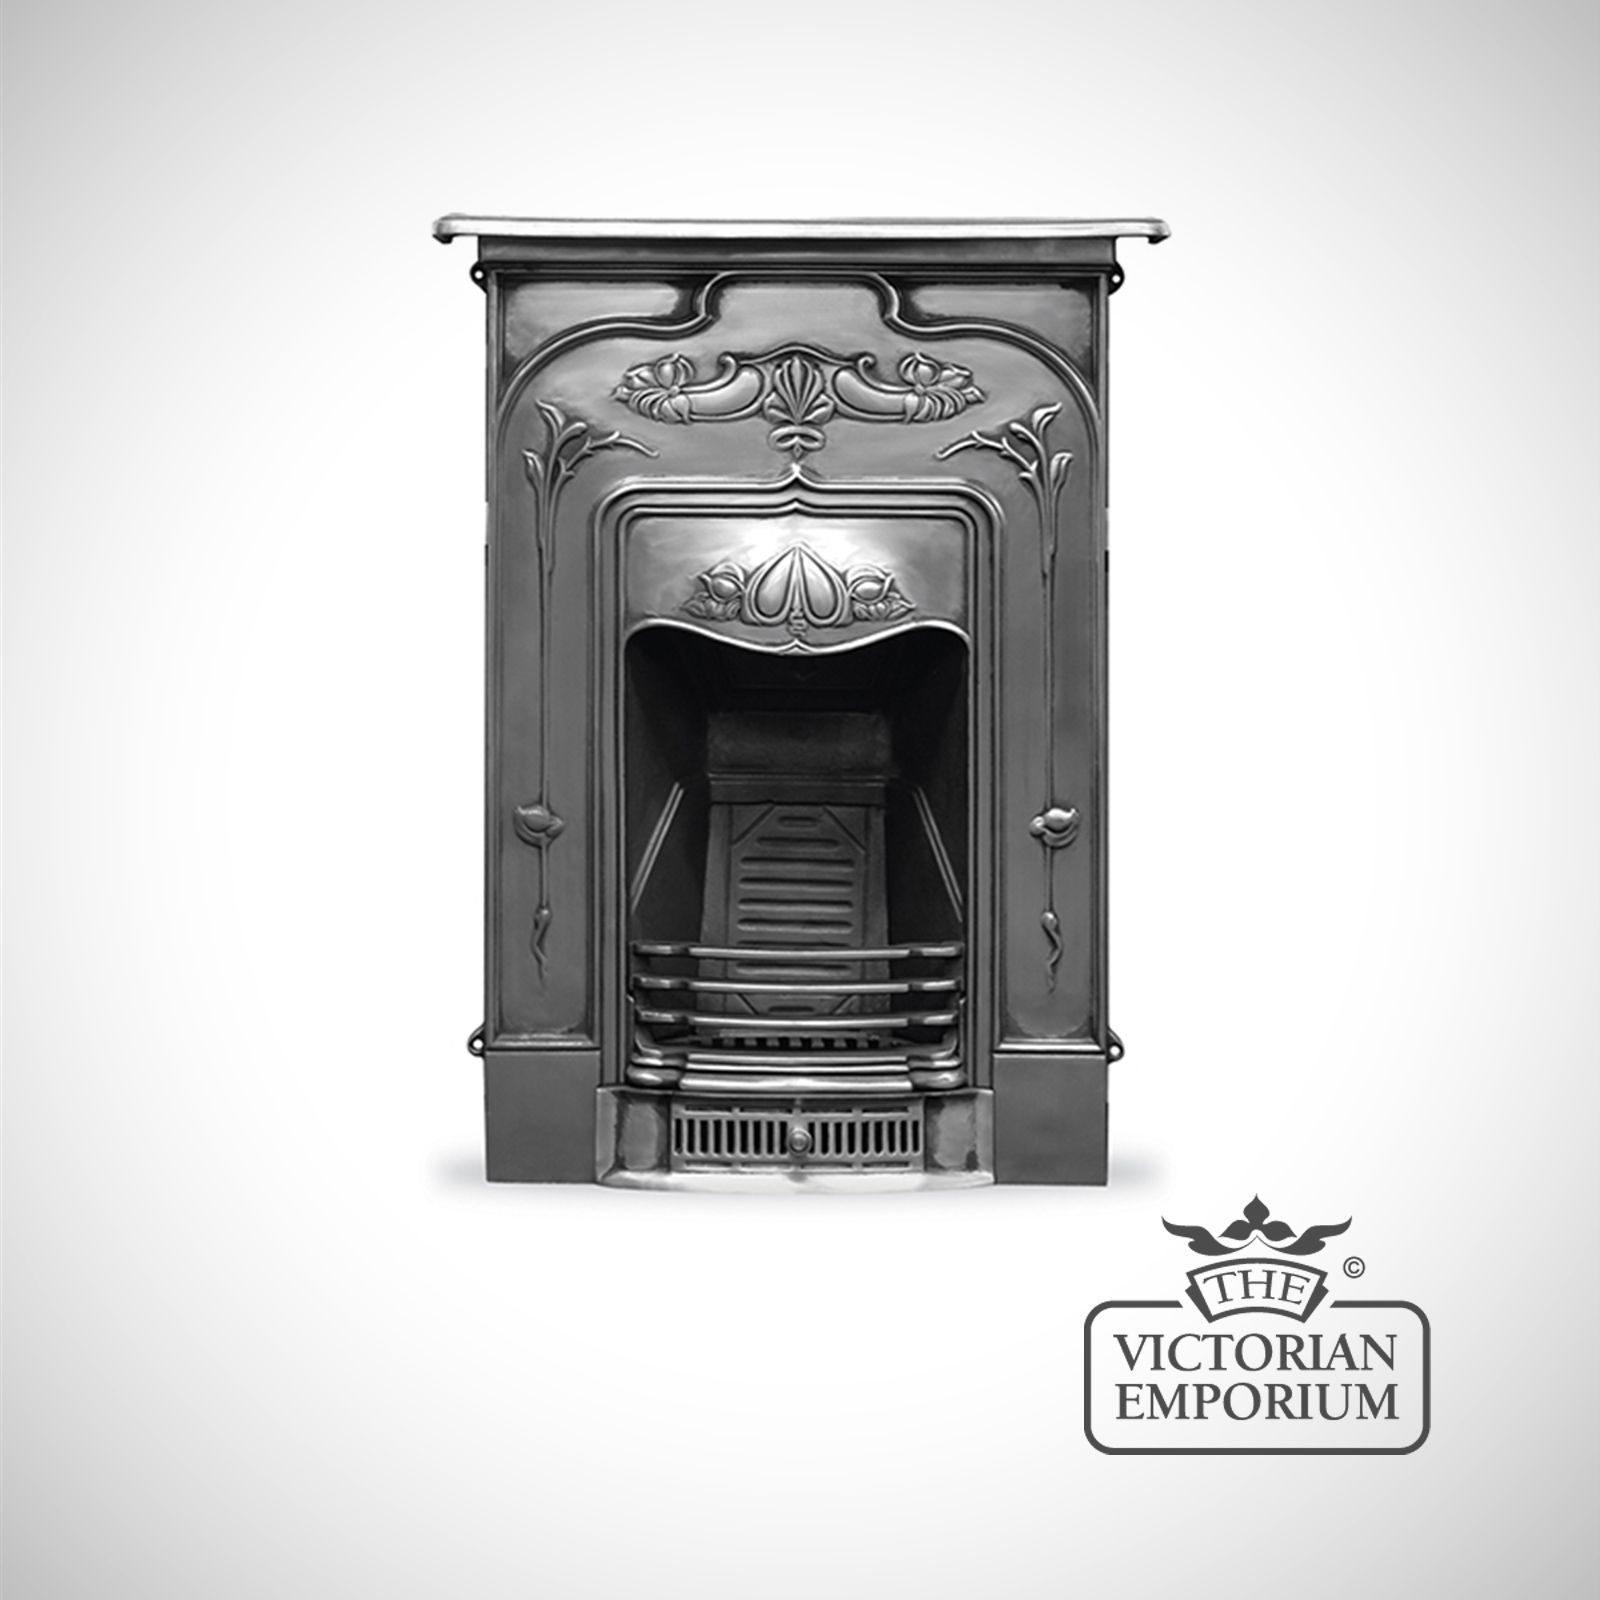 Art Nouveau style cast iron fireplace